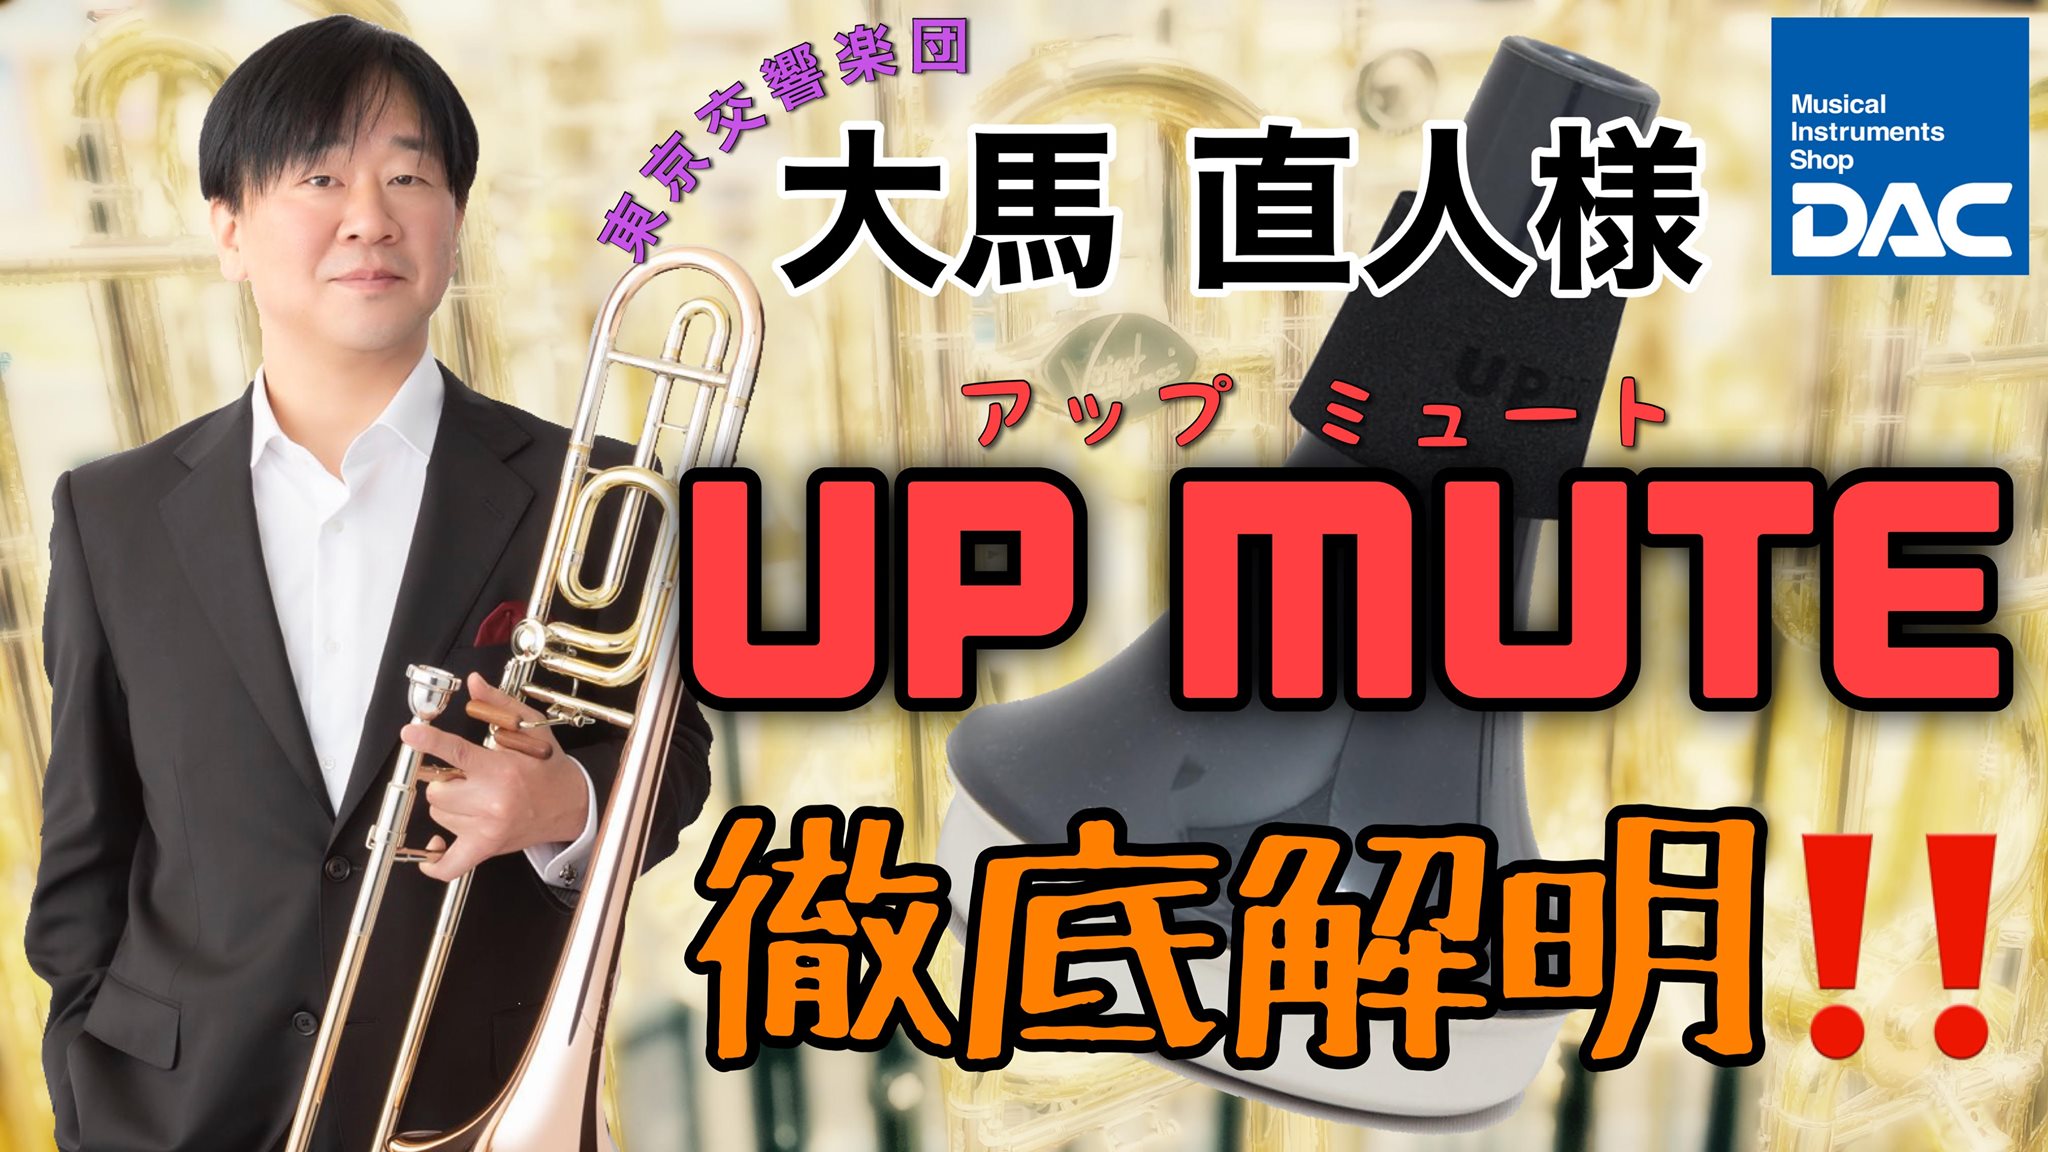 Youtube更新 ダクちゃんねる 話題沸騰 大馬直人氏によるトロンボーン Upmute アップミュート の練習方法実演 徹底解説 管楽器は東京の管楽器専門店ダクで